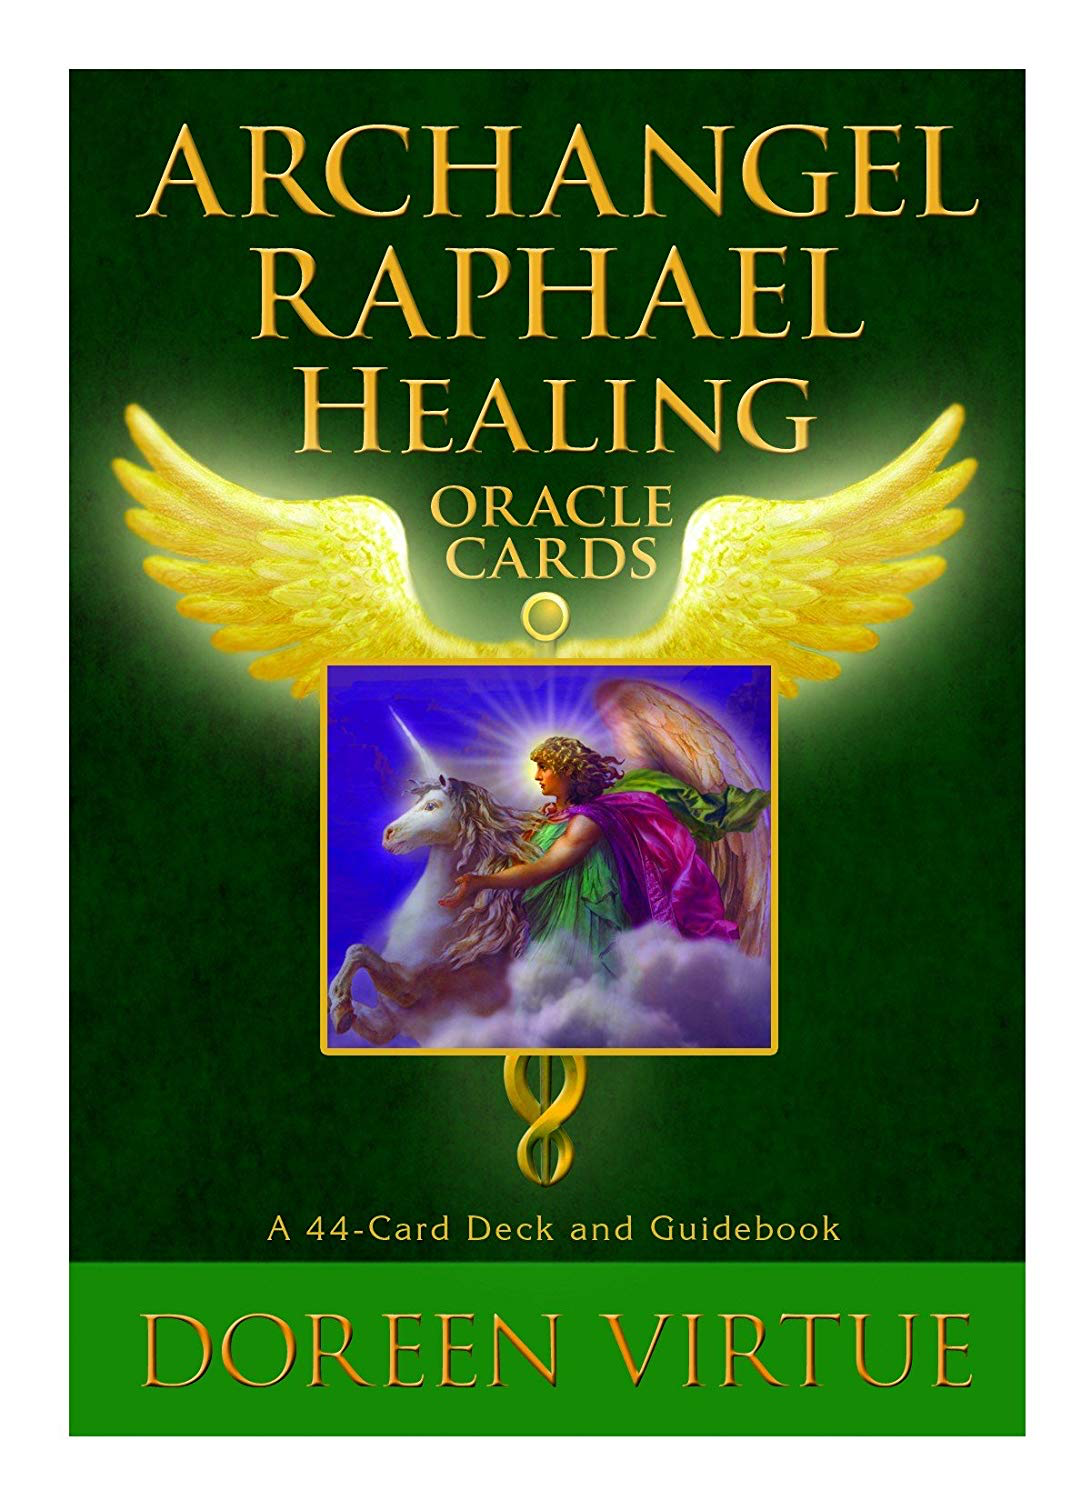 Archangel Raphael Healing Oracle Cards 英語版 中古 良い 日本のオラクルカード タロットカード全集オンラインストア